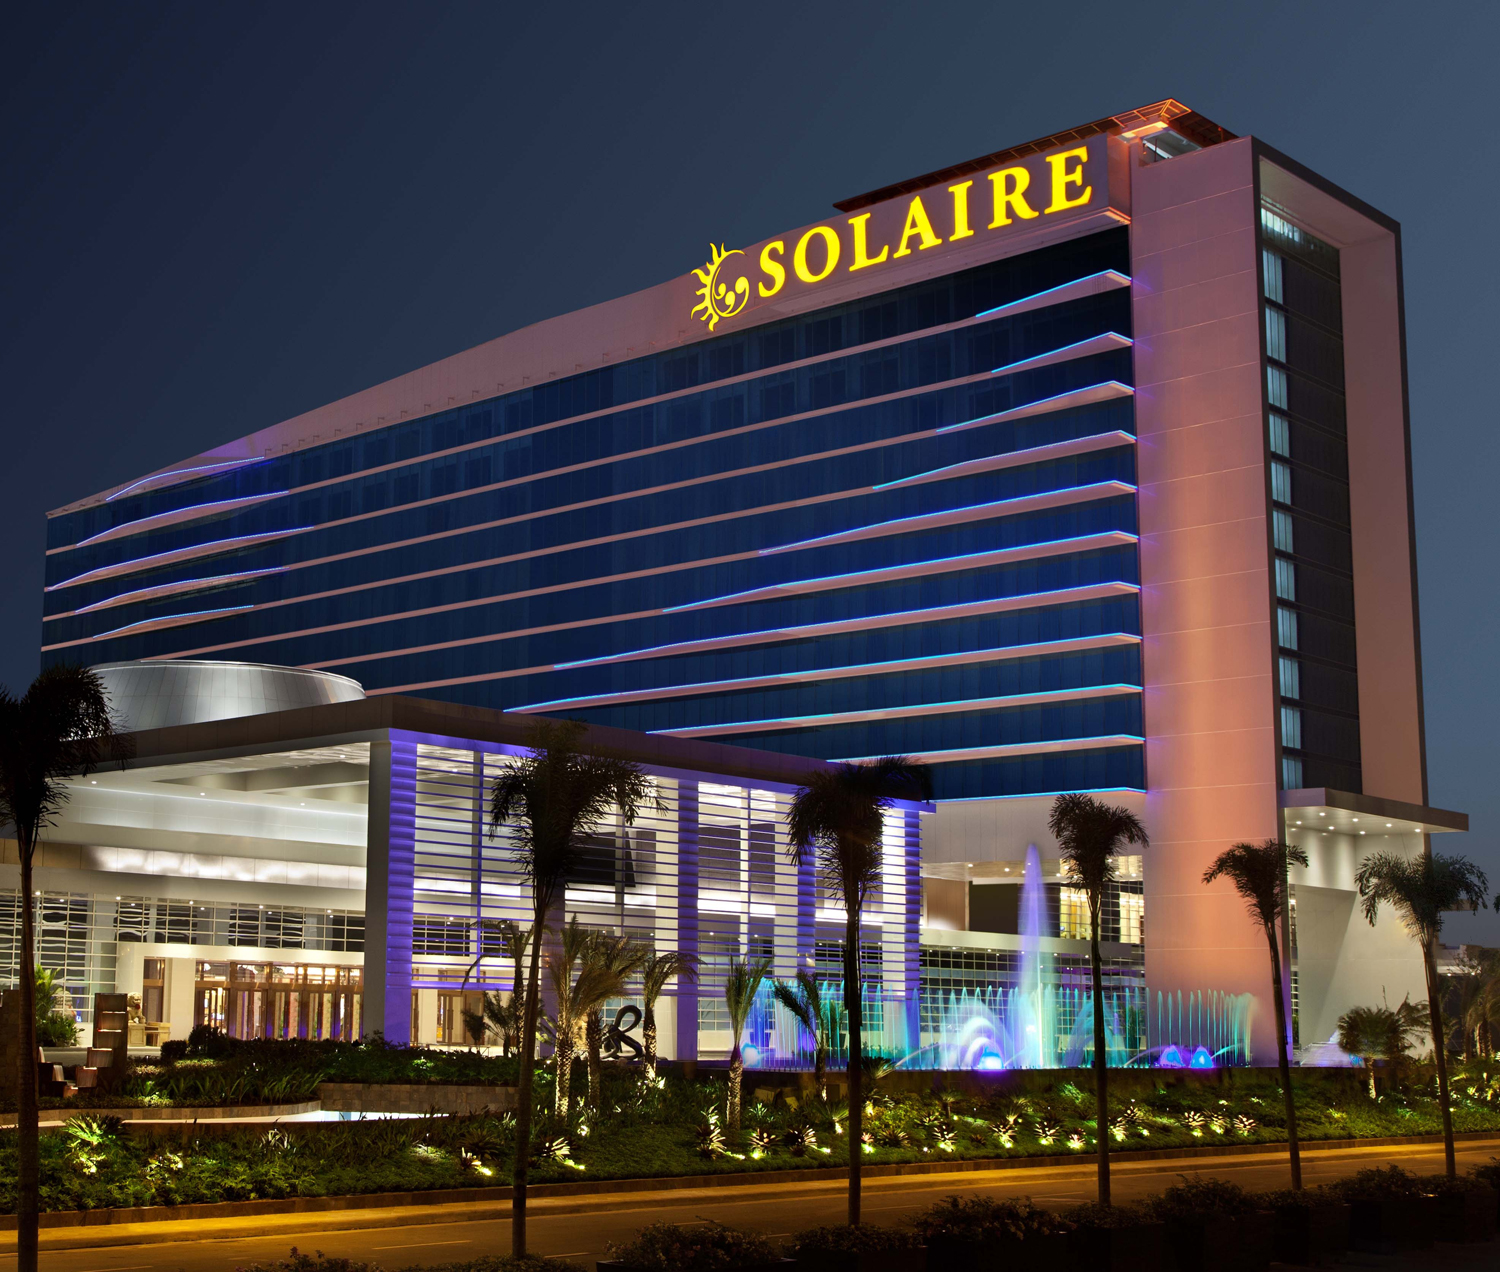 Solaire Casino